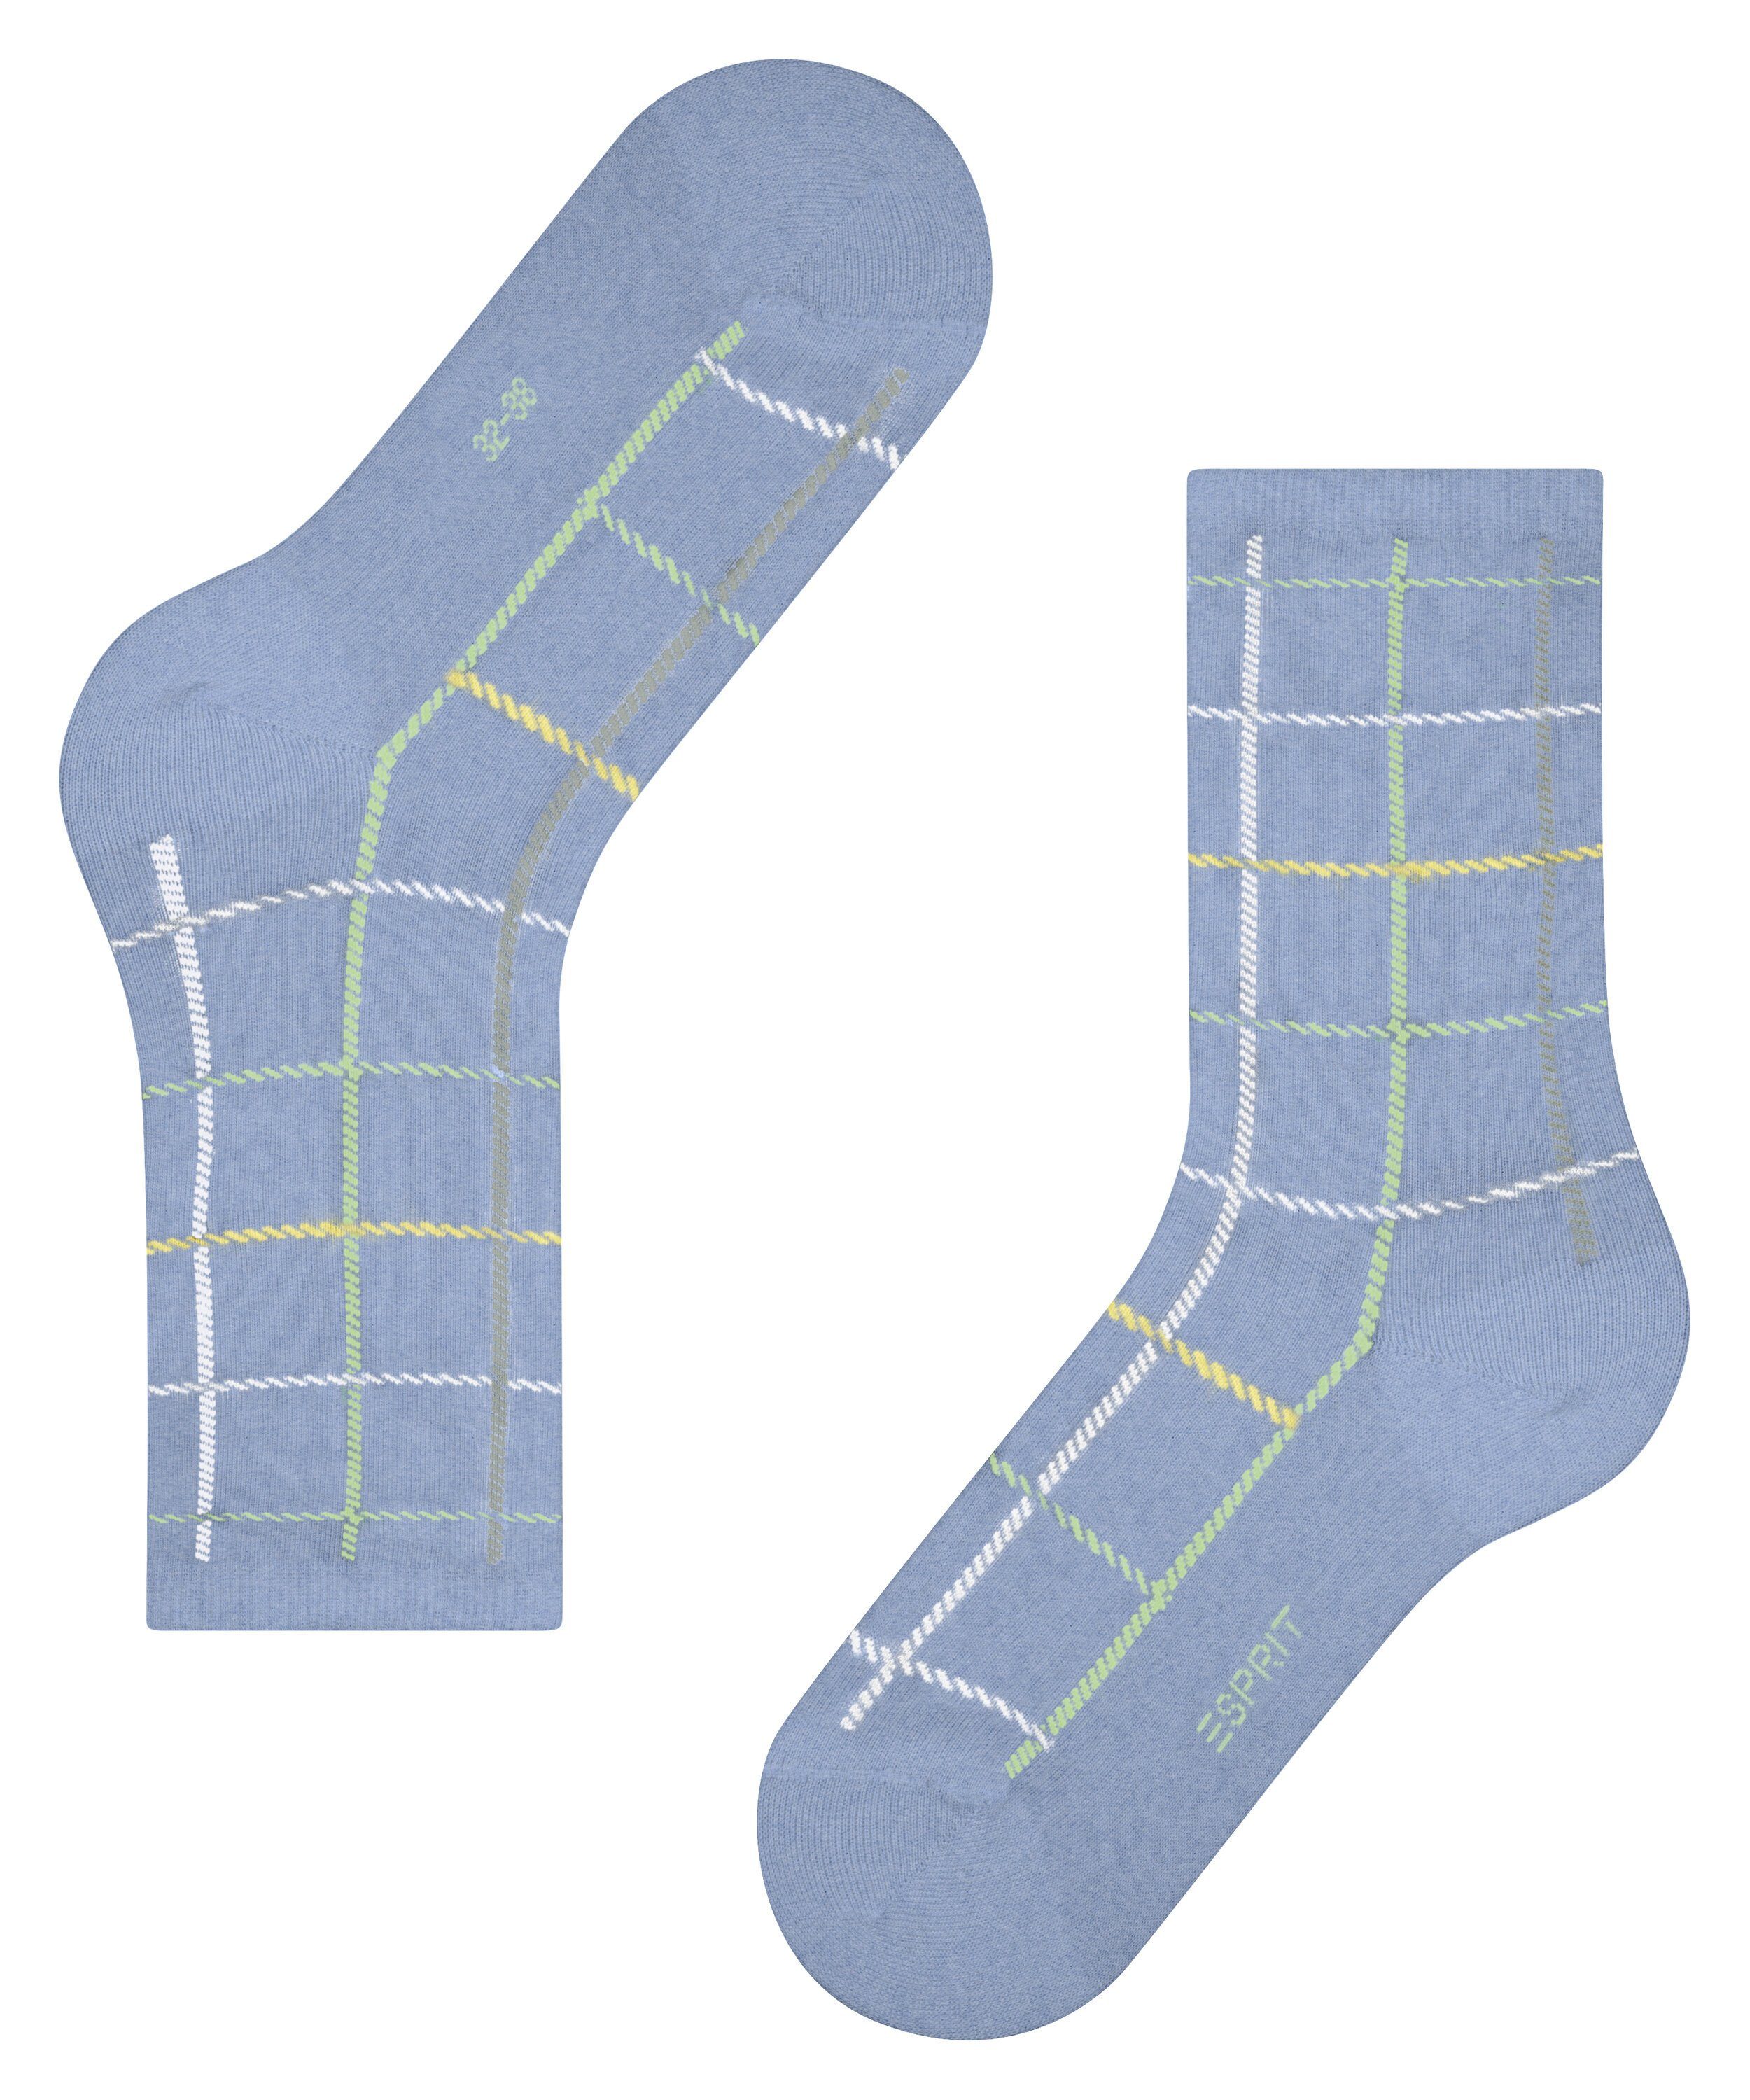 Esprit (6458) jeans (1-Paar) Summer Socken Check